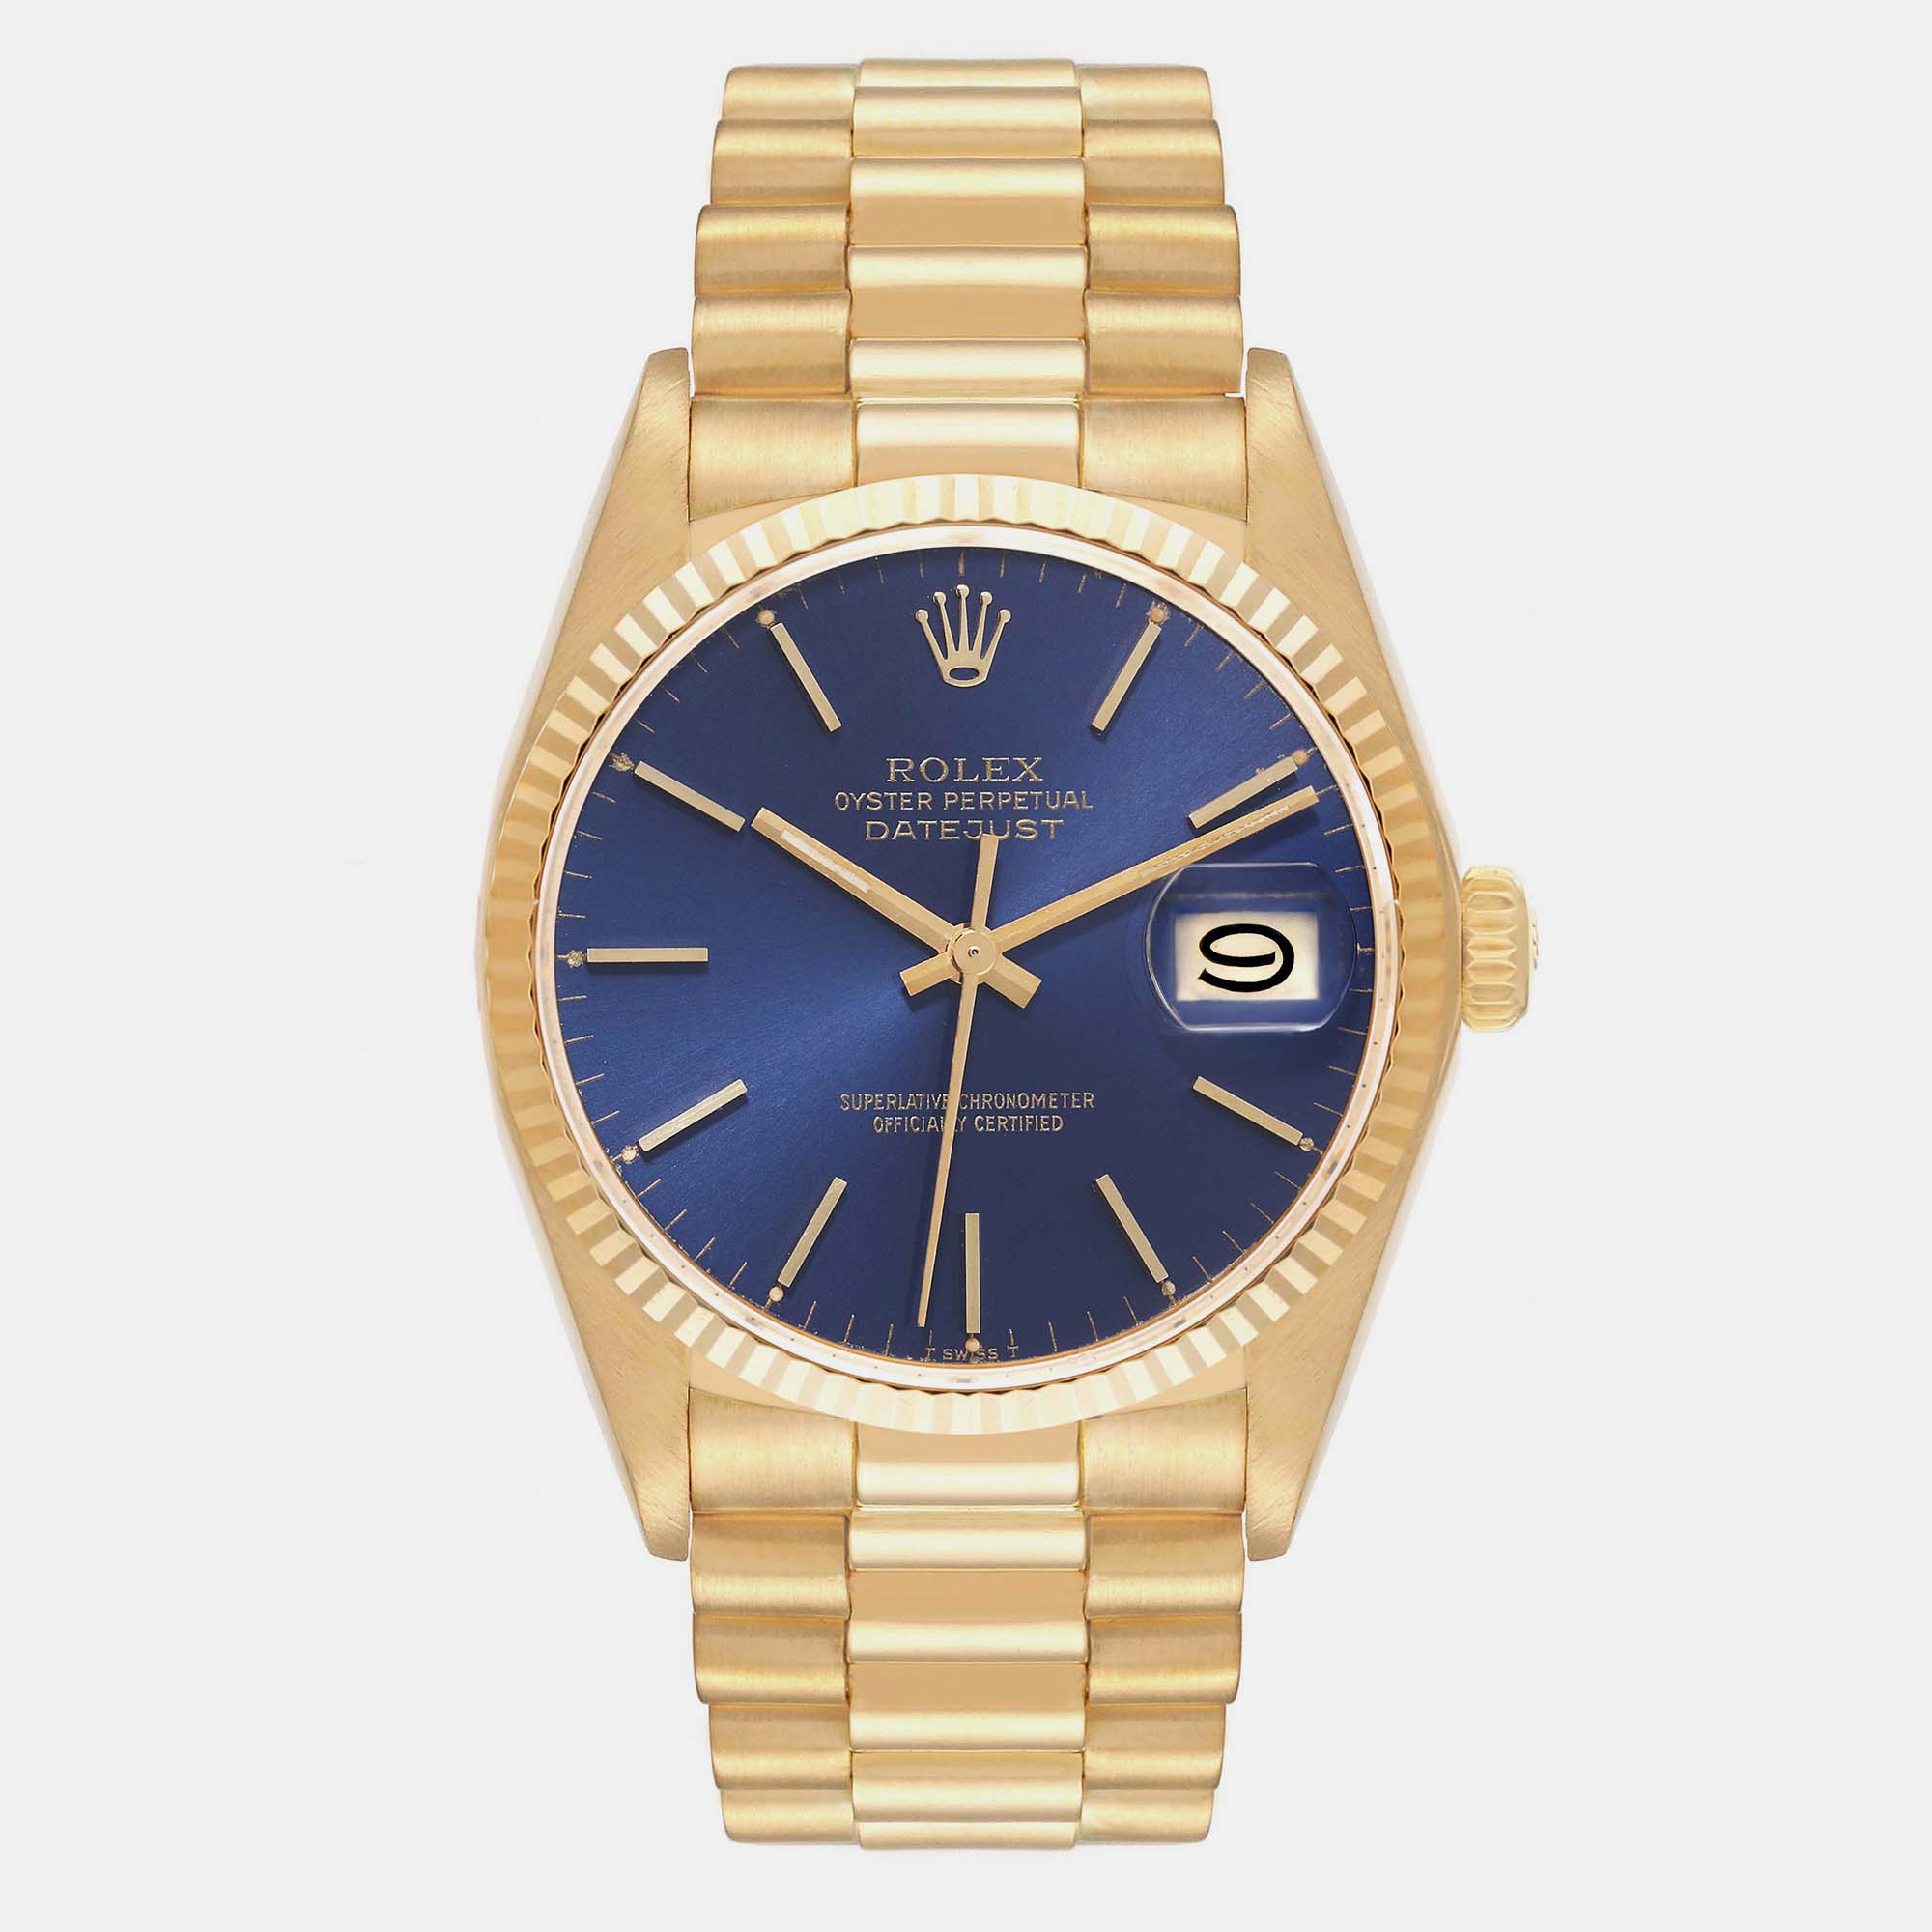 Rolex datejust yellow gold blue dial vintage men's watch 36 mm